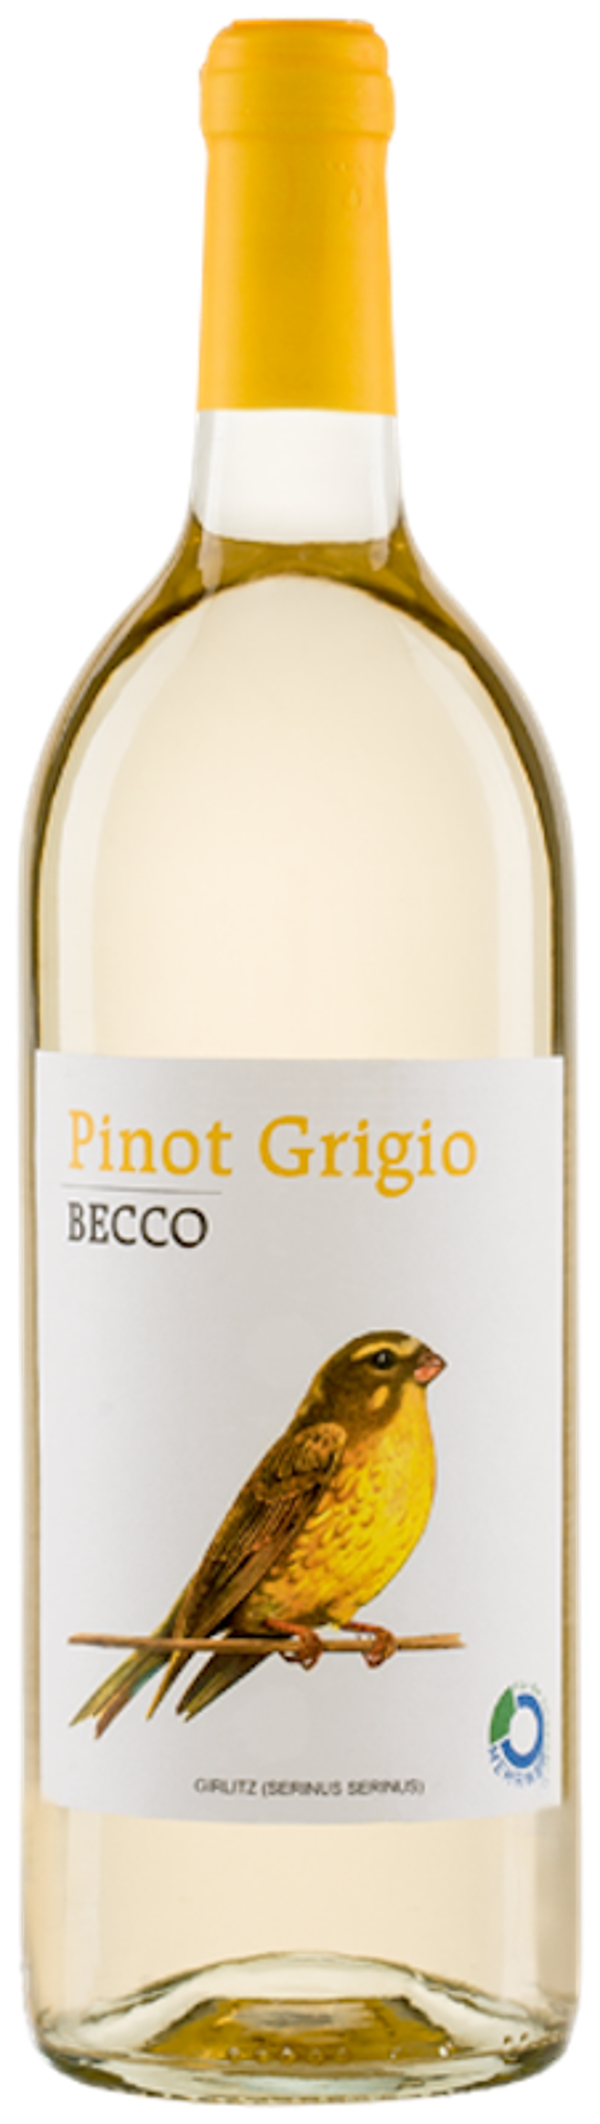 Produktfoto zu Pinot Grigio Becco 1l Riegel Bioweine